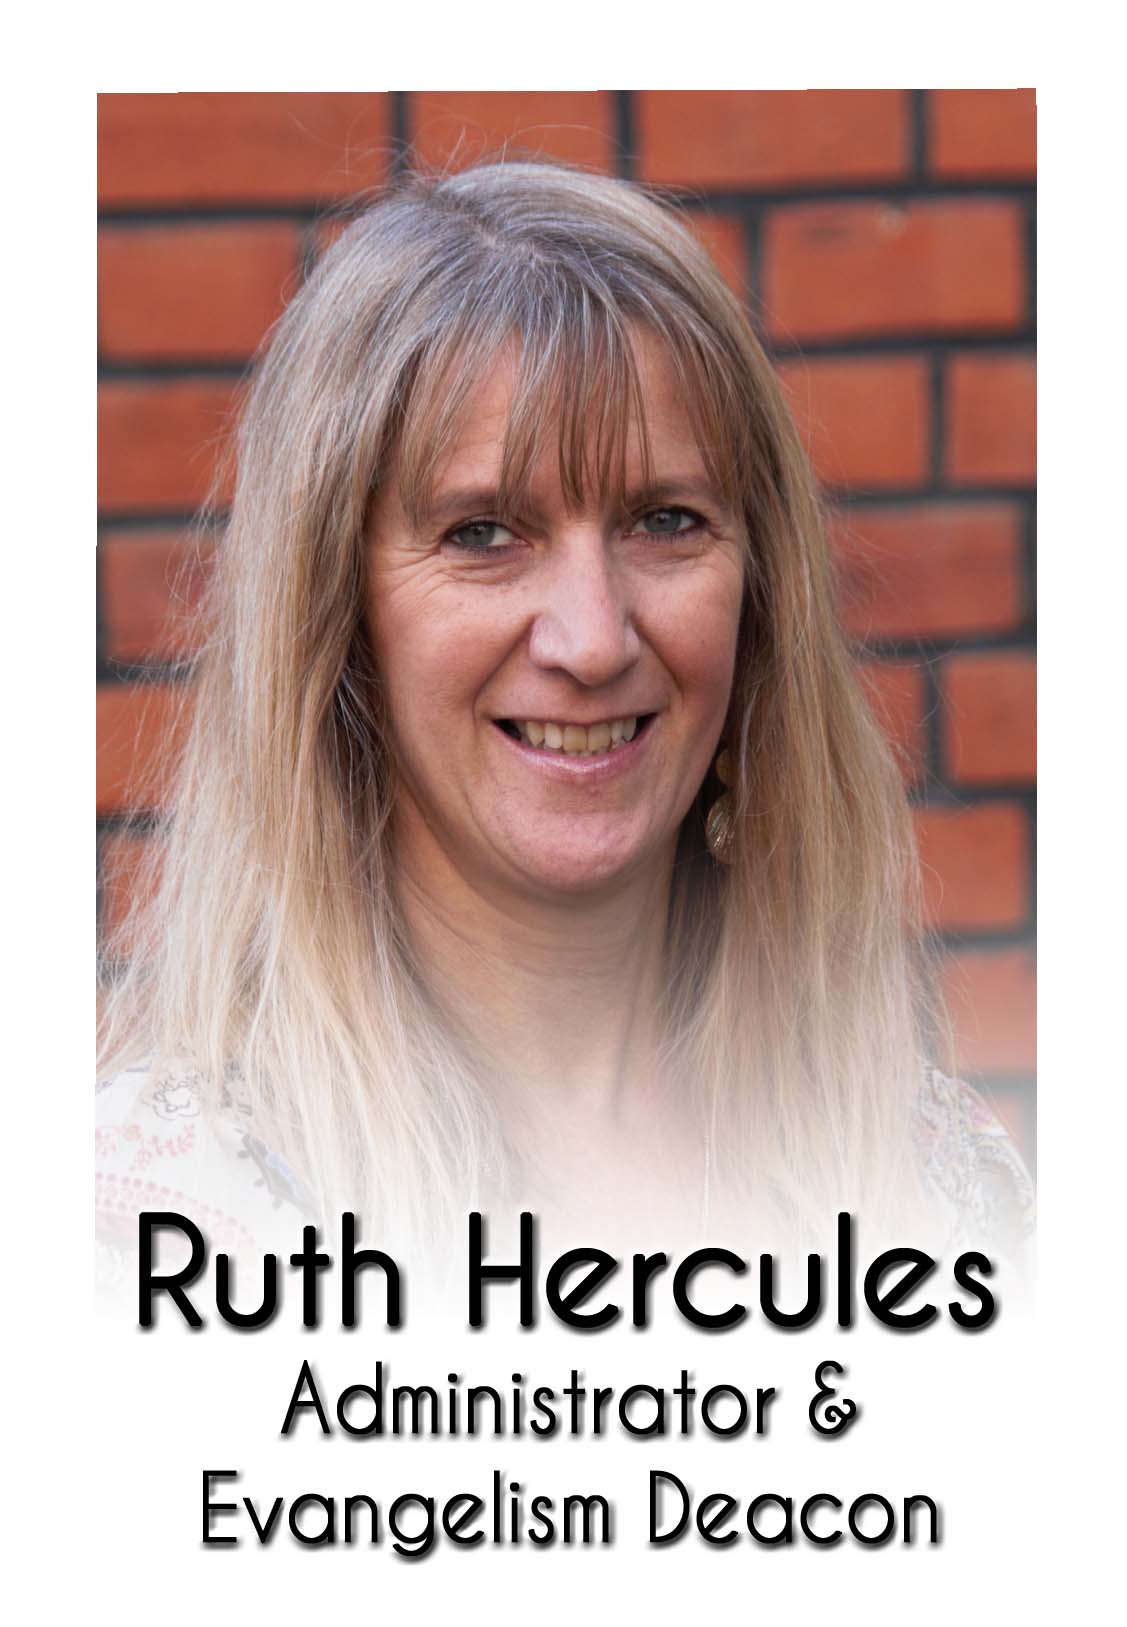 Ruth Hercules labelled